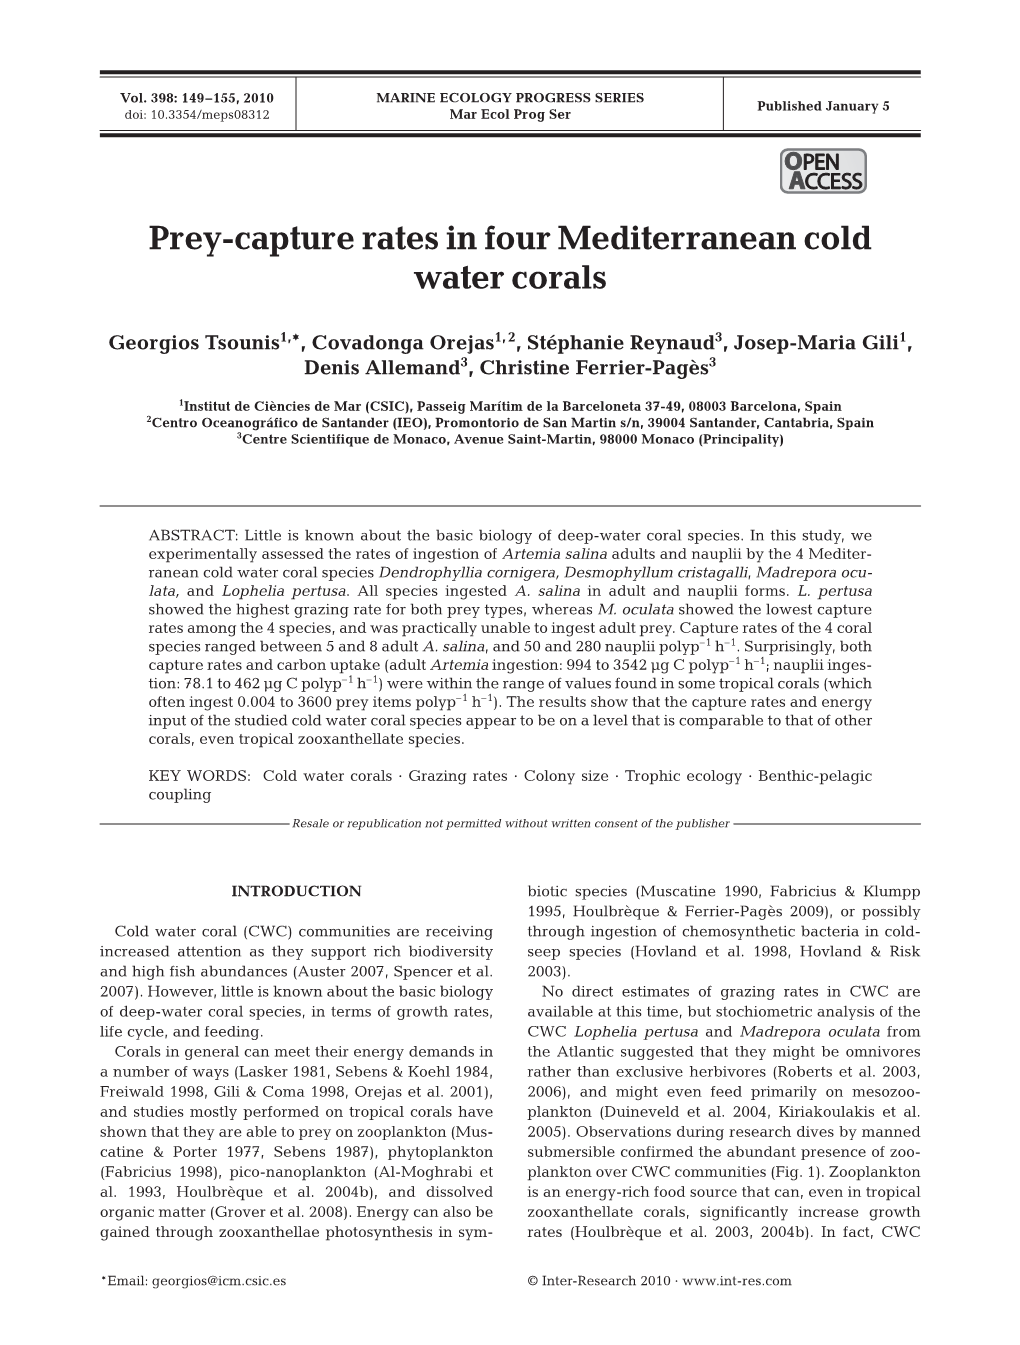 Prey-Capture Rates in Four Mediterranean Cold Water Corals